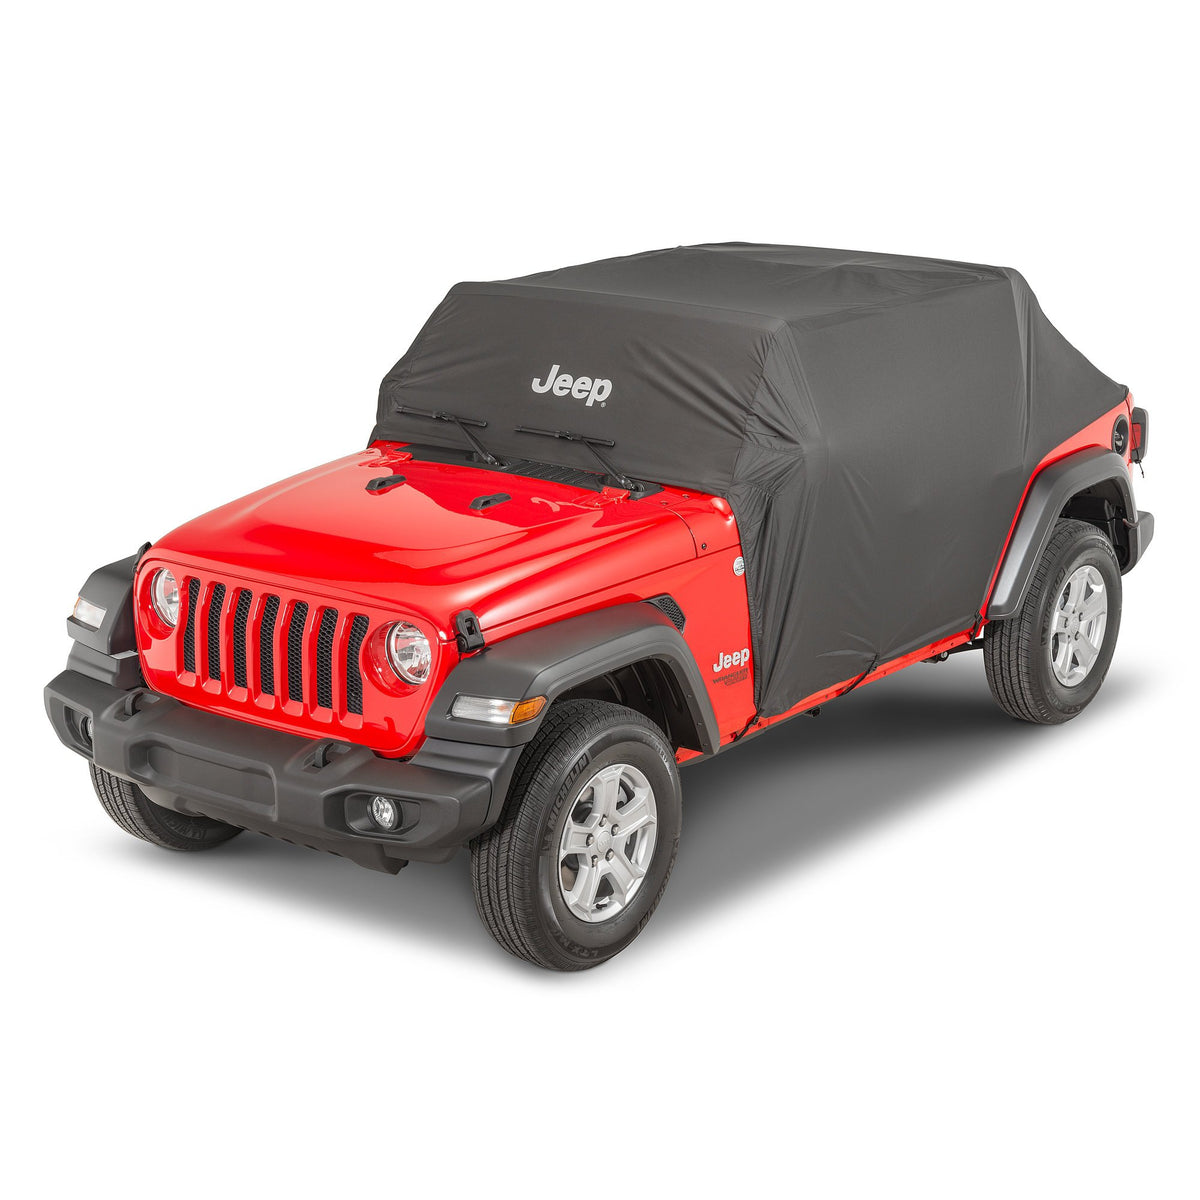 Mopar 82215370 Jeep Logo Cab Cover for 18-20 Jeep Wrangler JL Unlimited